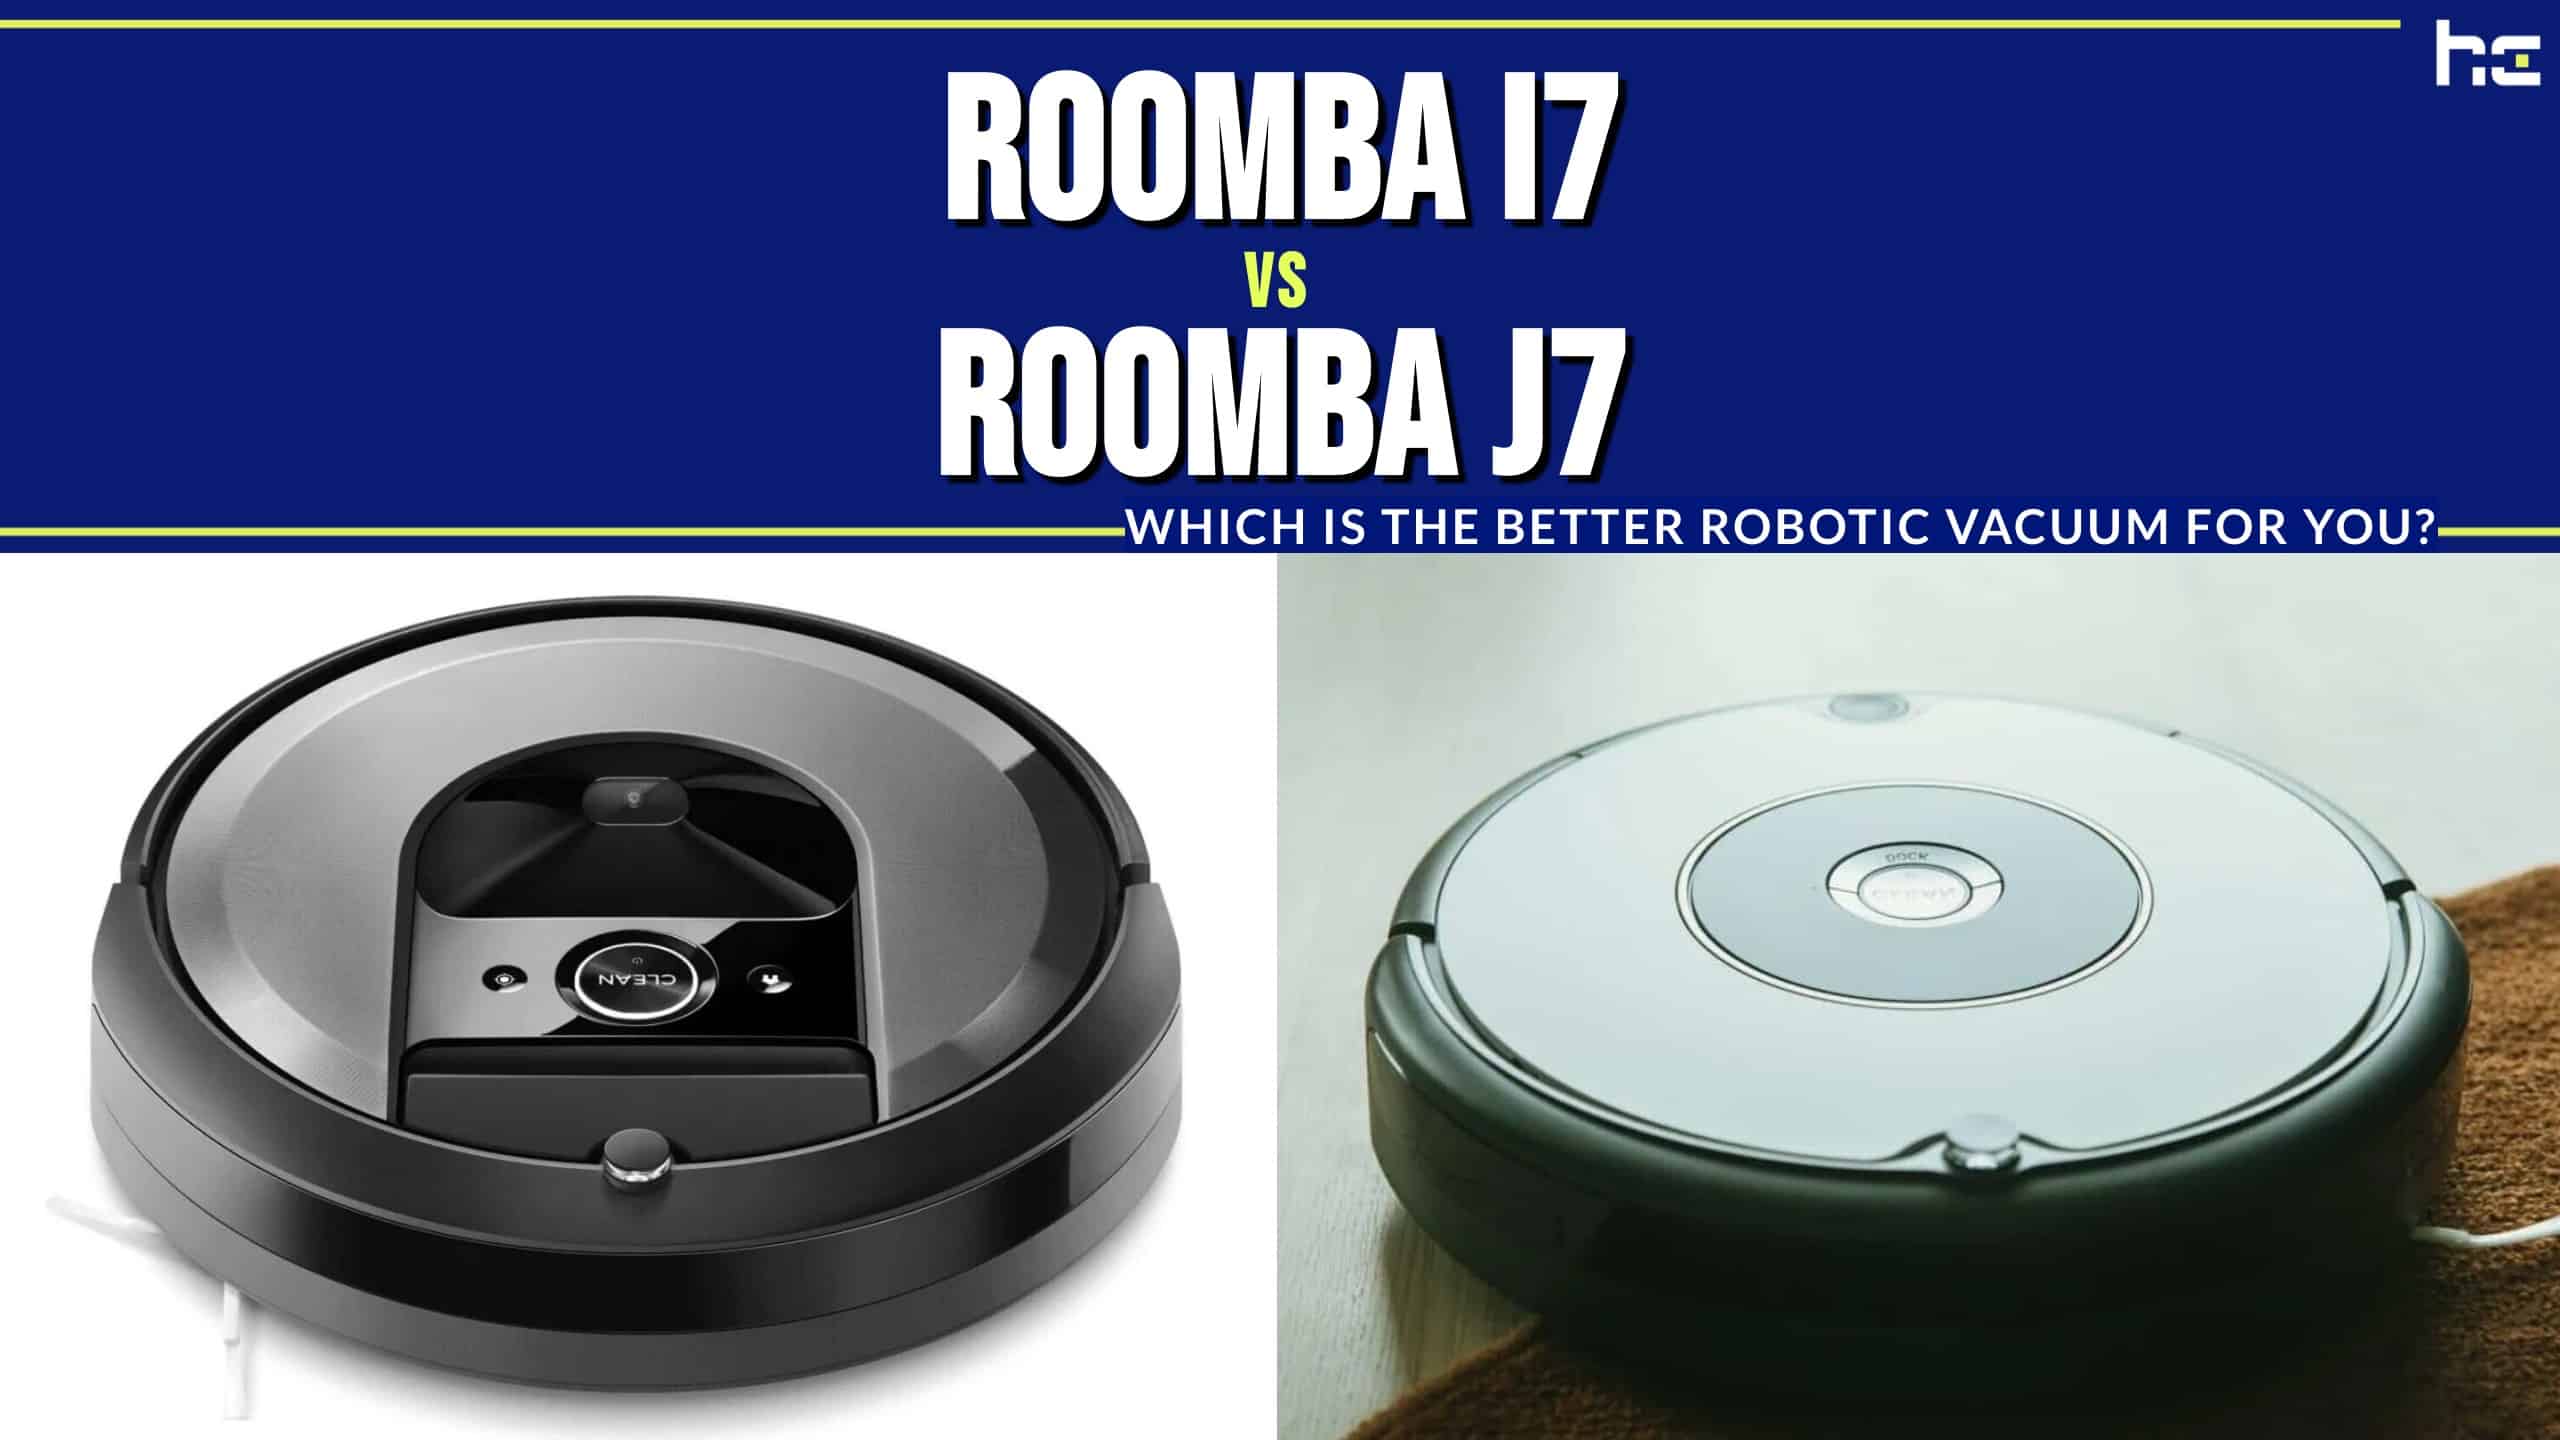 iRobot Roomba J7 7150 Robot Vacuum with Smart Mapping, Identifies